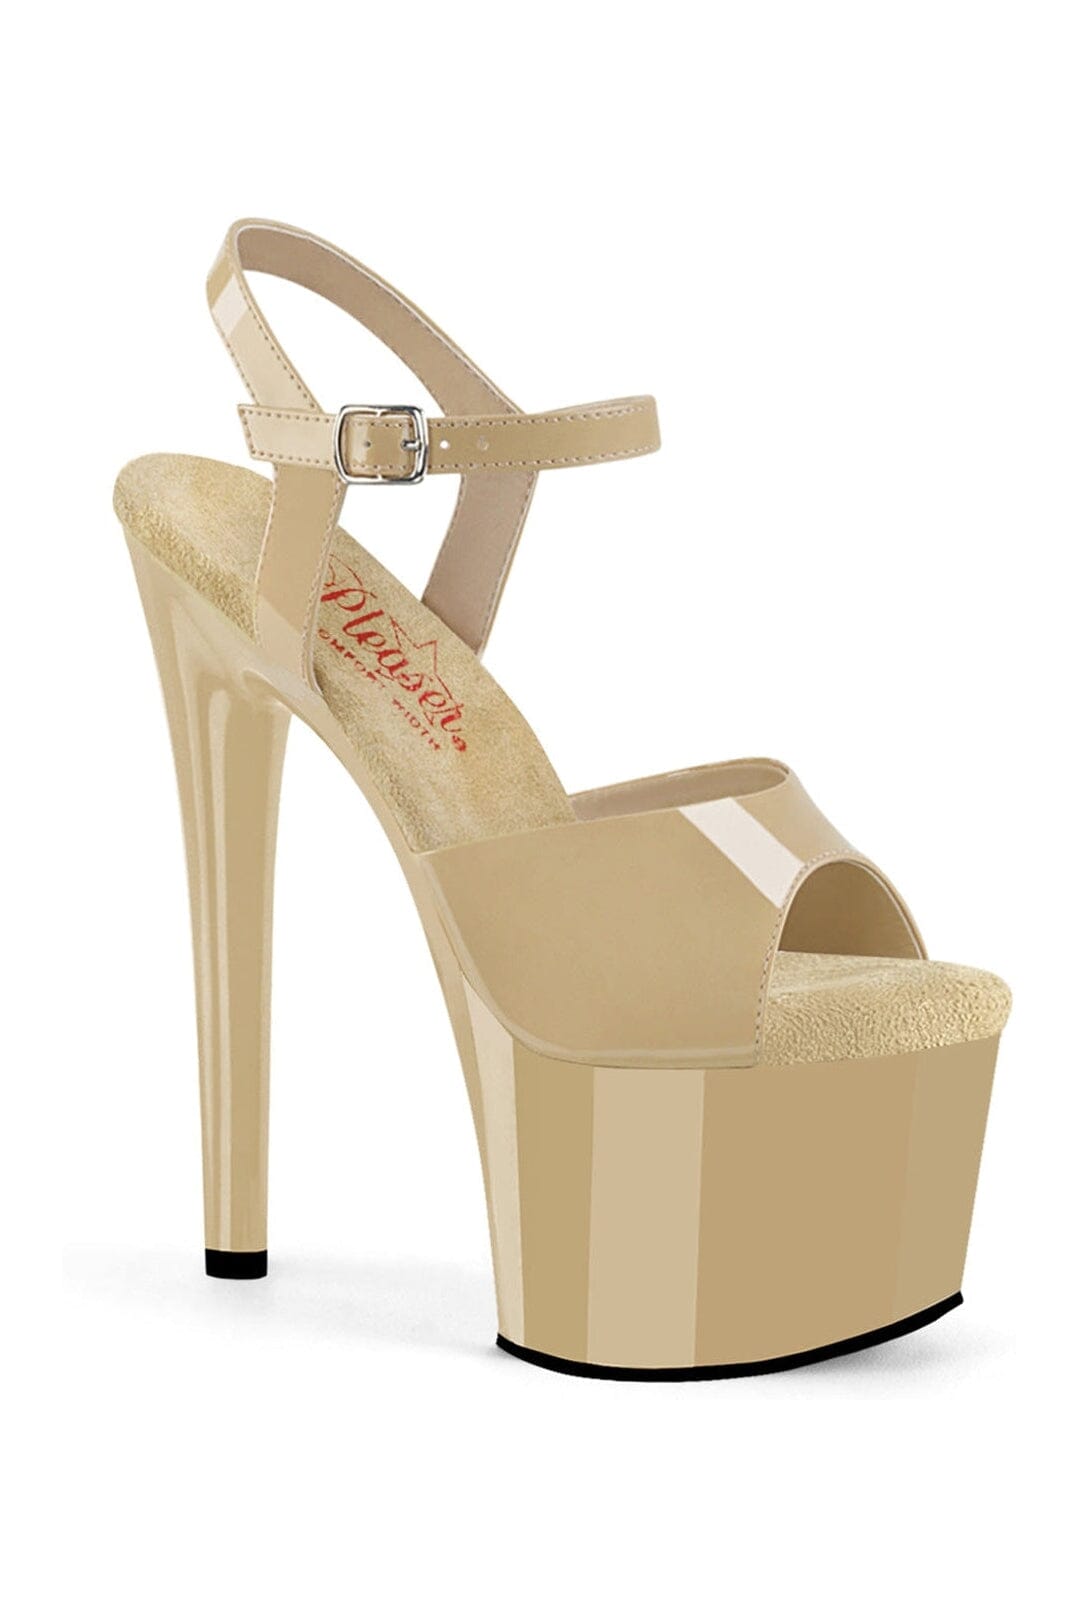 Pleaser Bone Sandals Platform Stripper Shoes | Buy at Sexyshoes.com